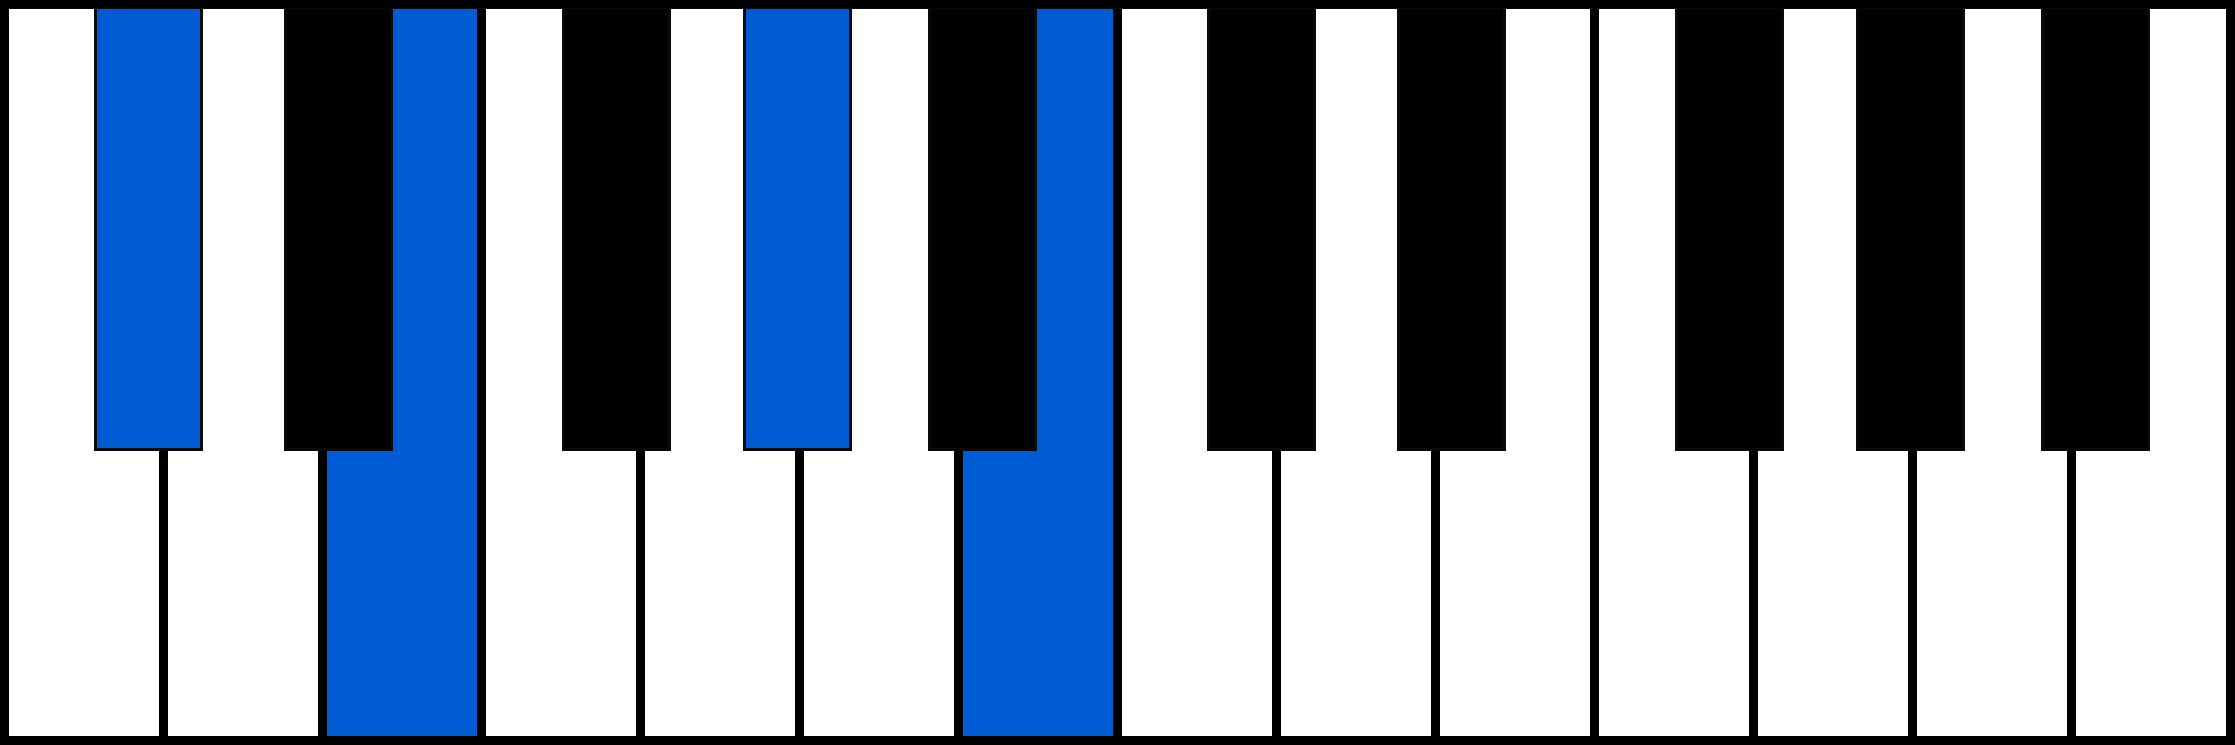 C#m7 piano chord